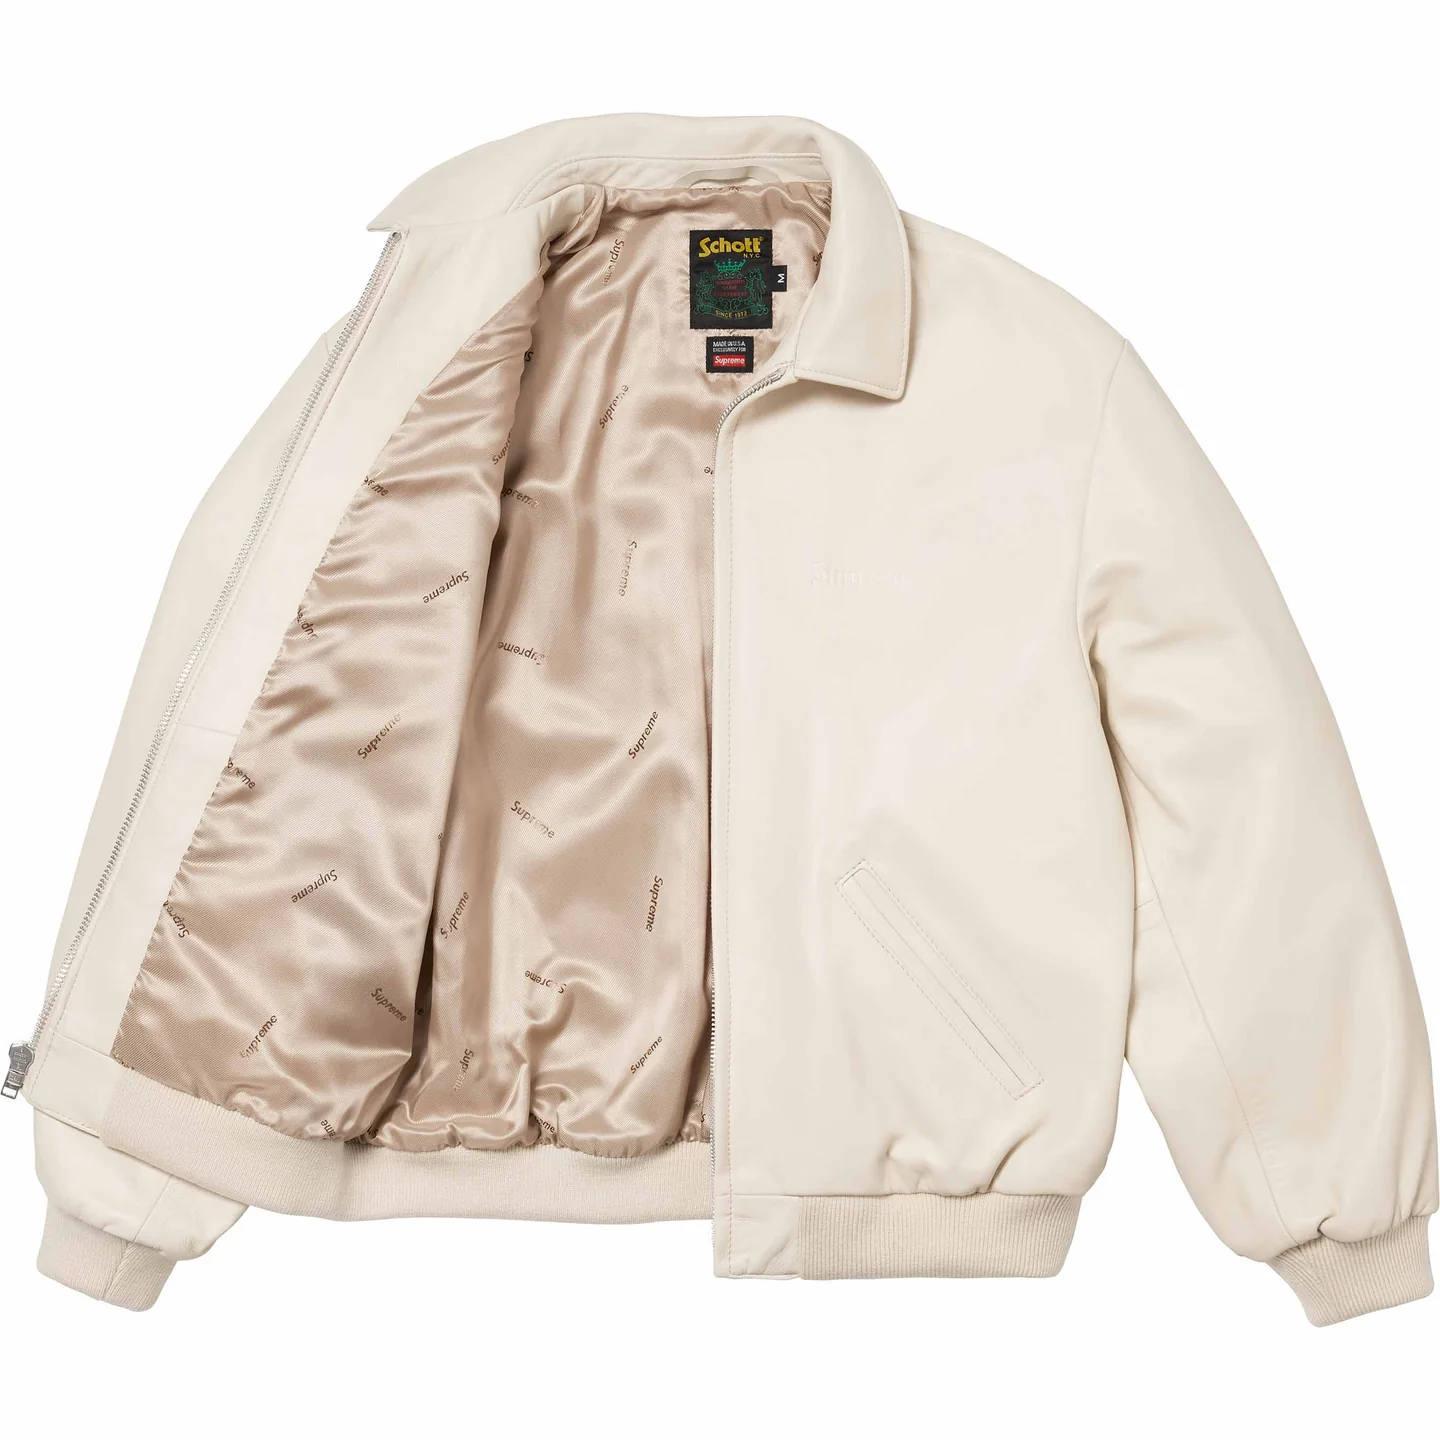 Supreme®/Schott® Hooded Leather Bomber Jacket